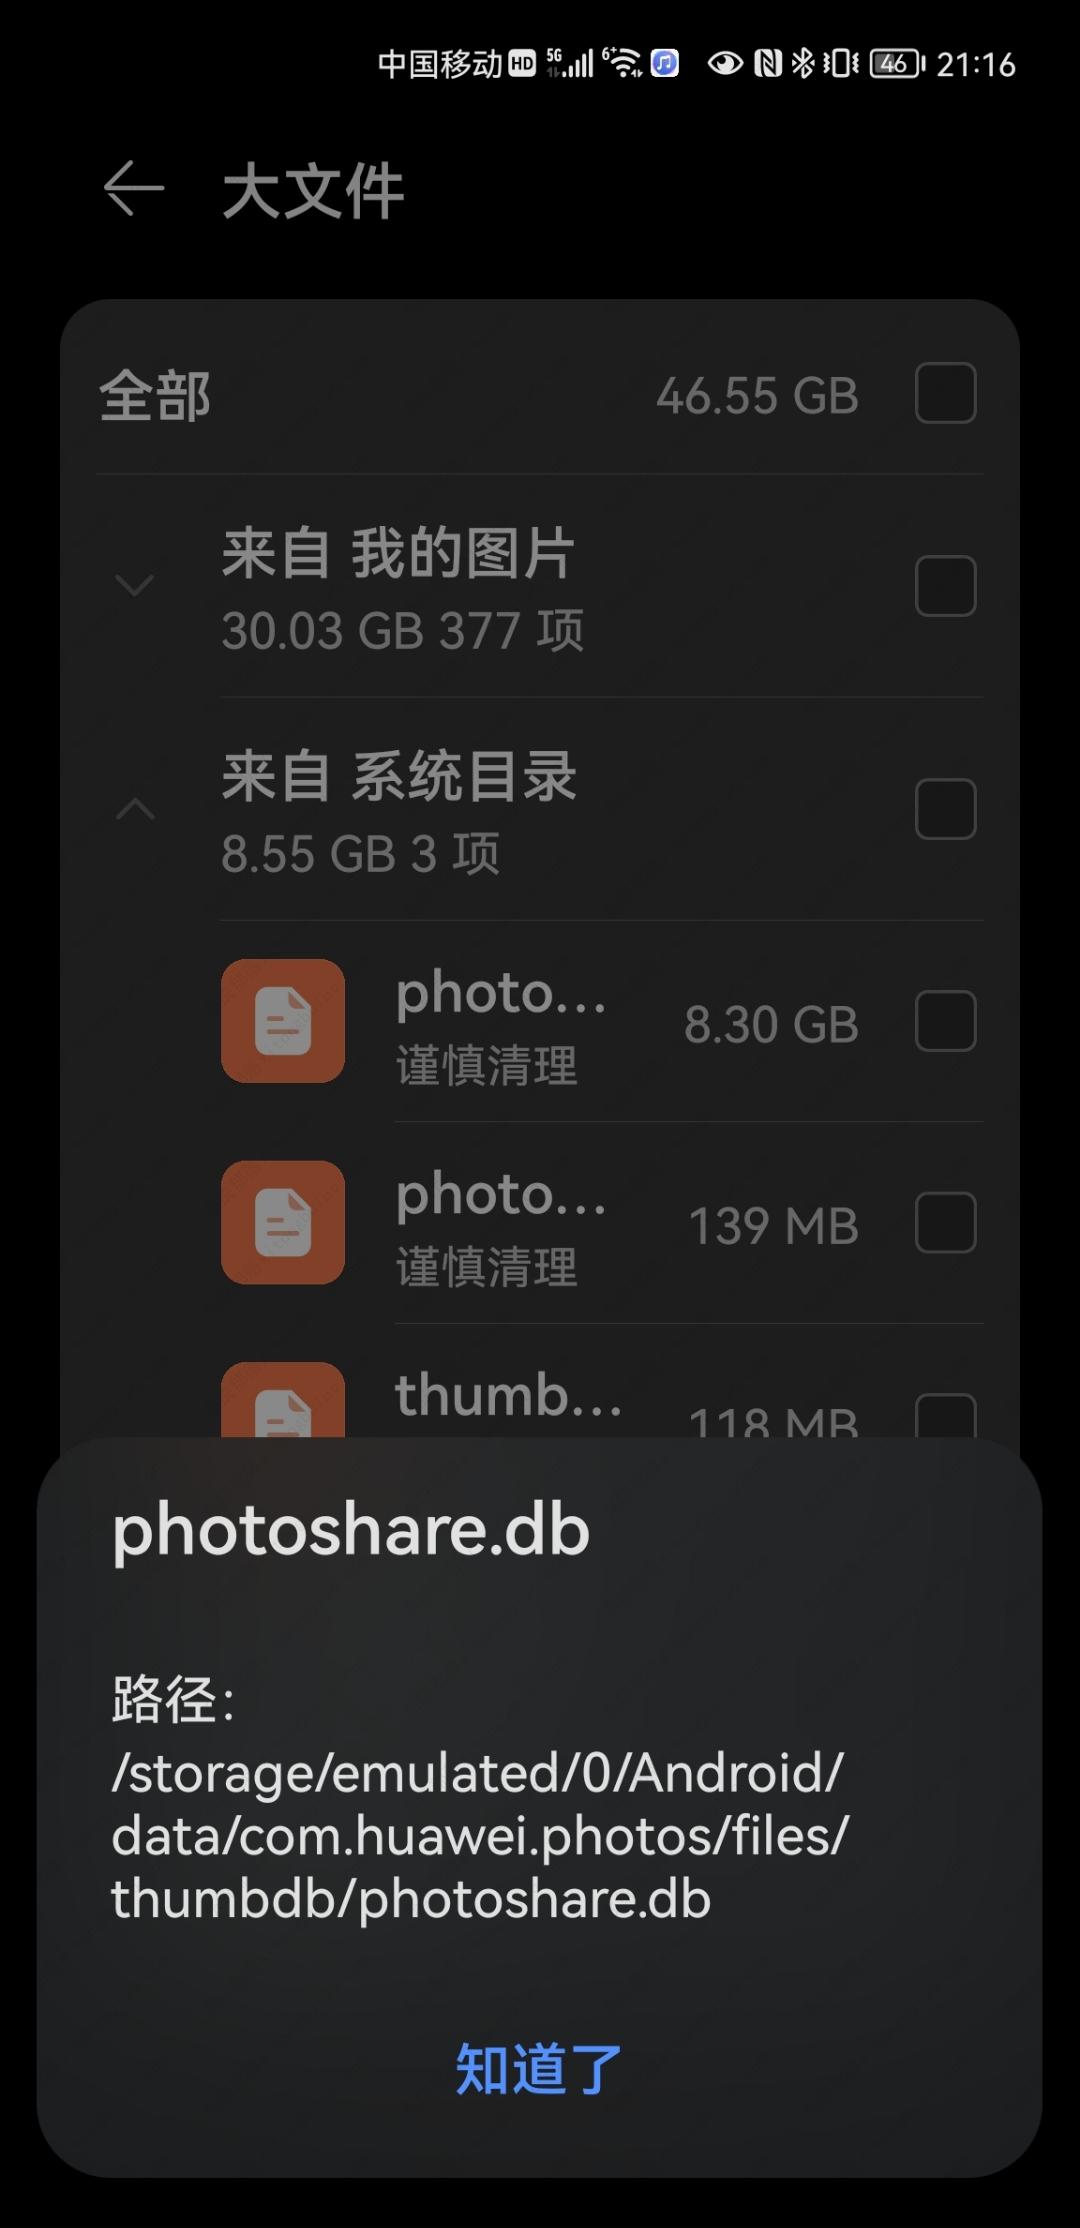 photoshare.db文件可以删除吗？